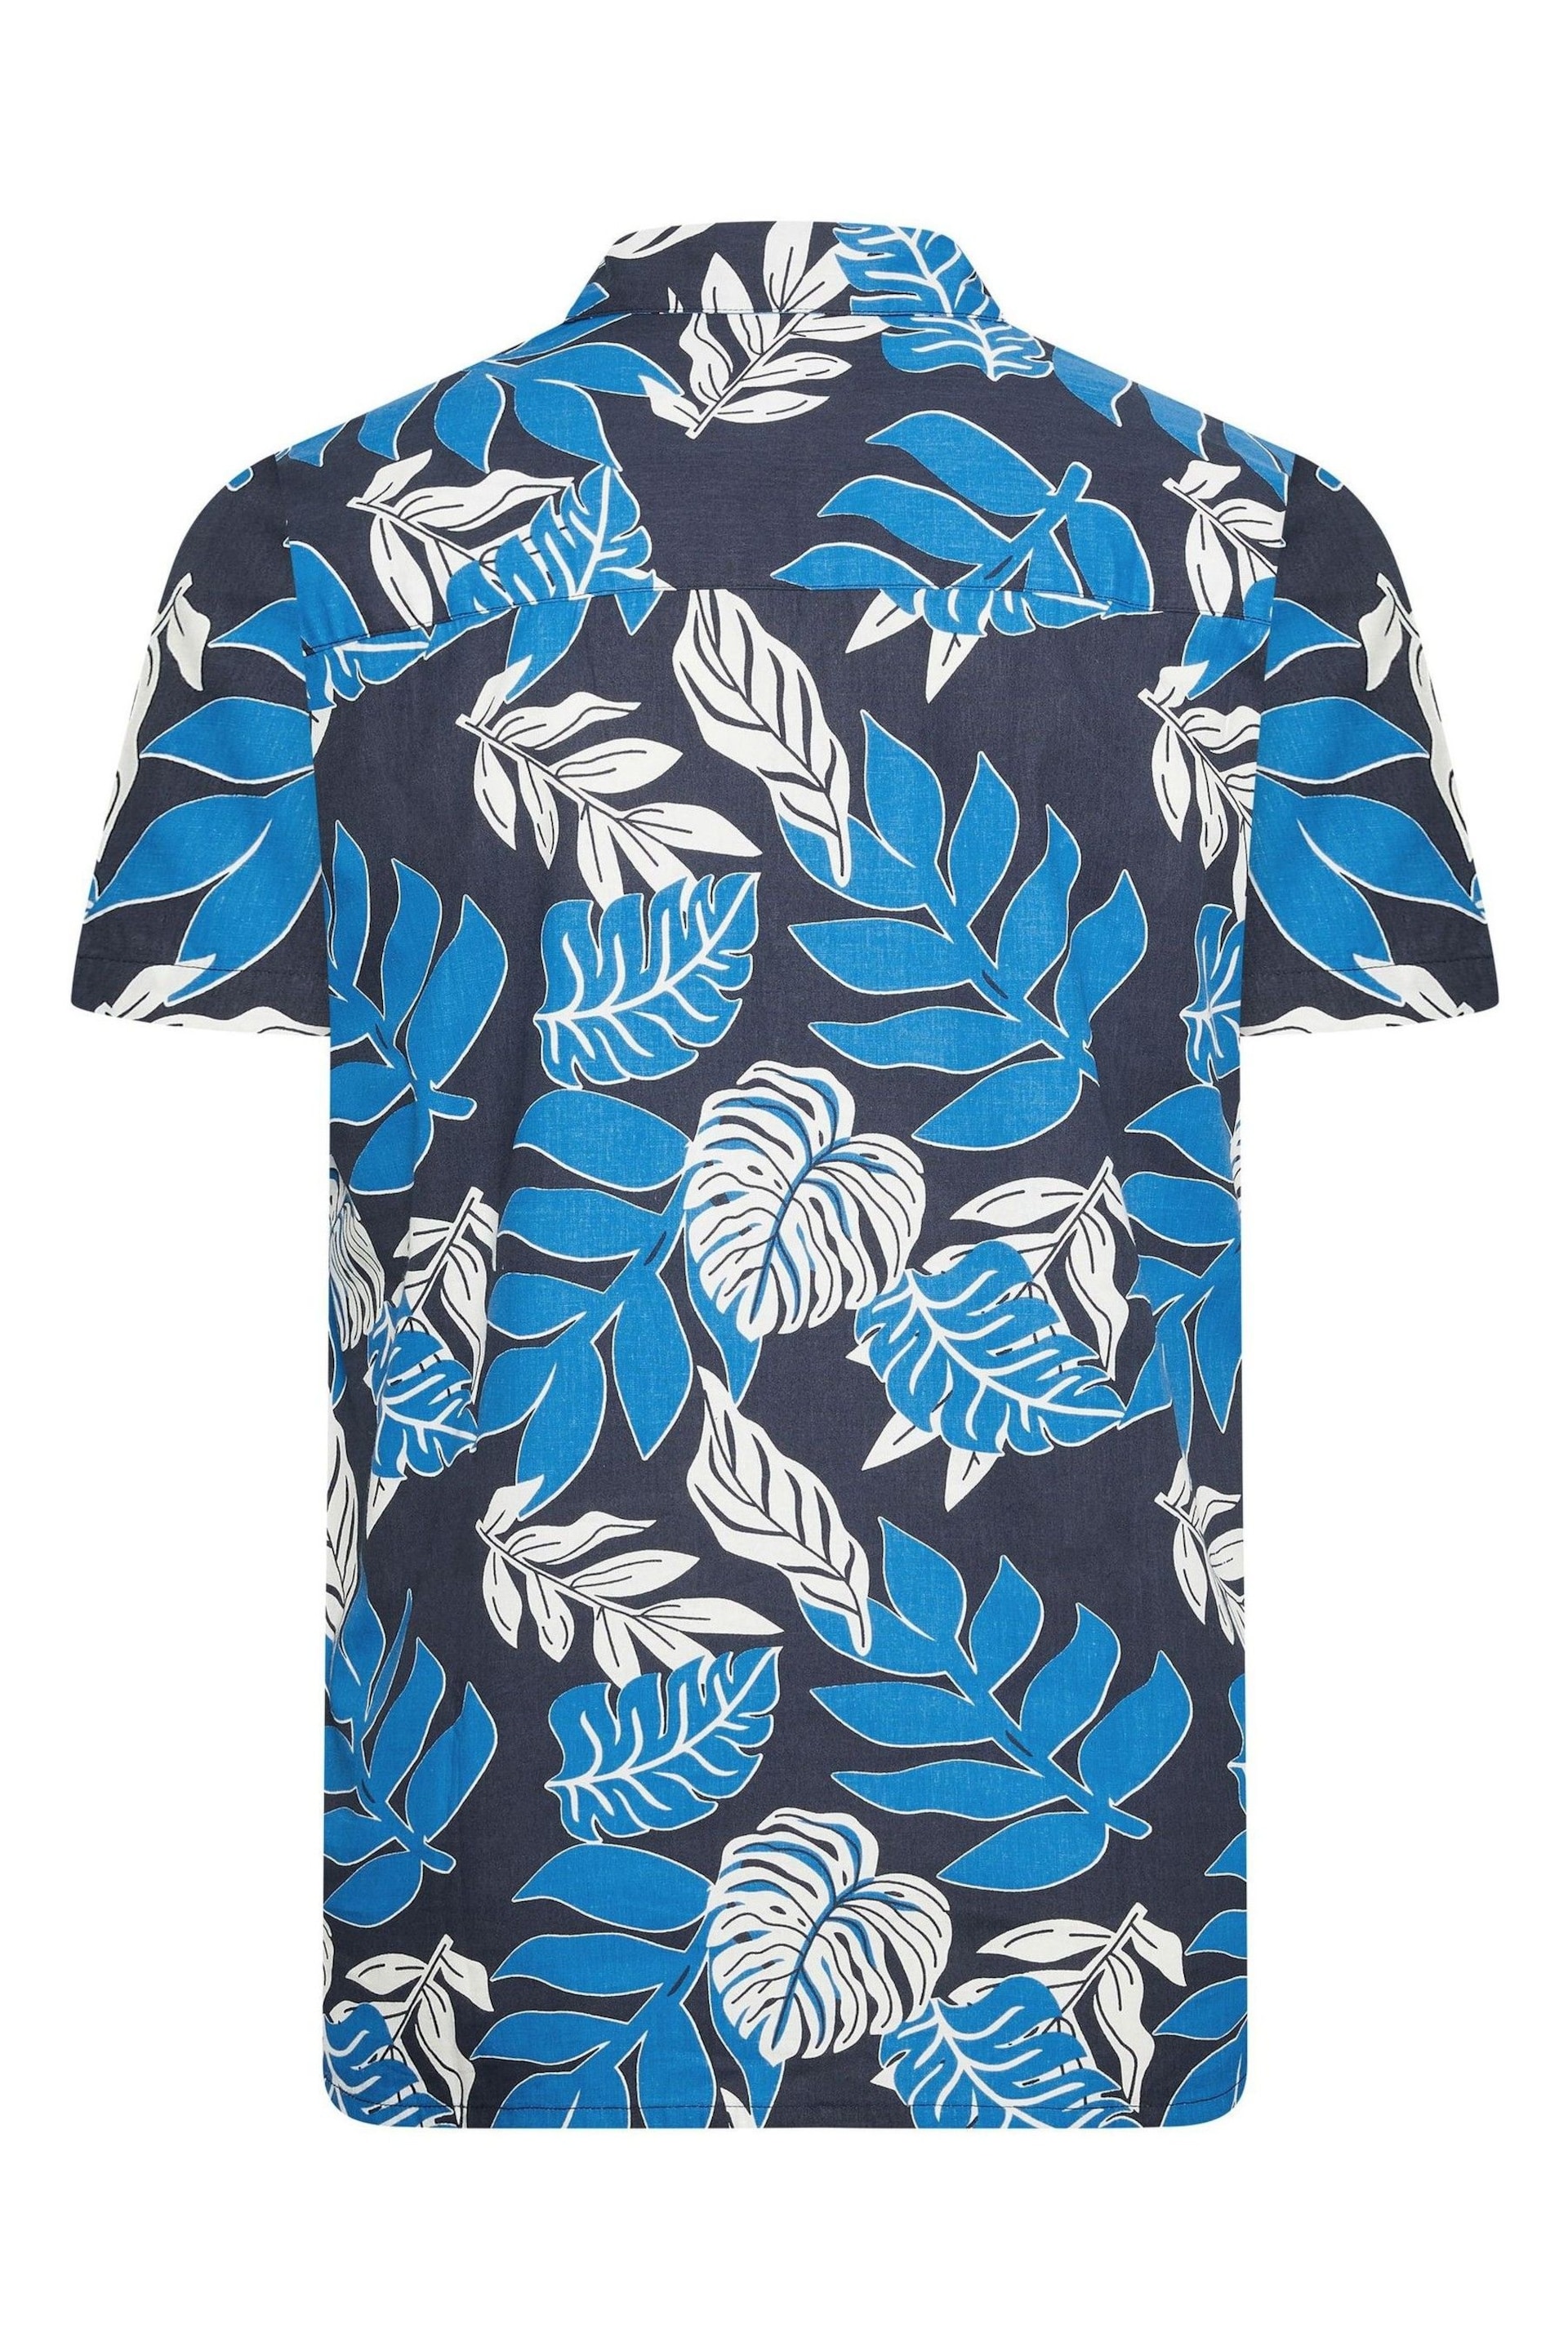 BadRhino Big & Tall Navy Blue Leaf Print Shirt - Image 3 of 3